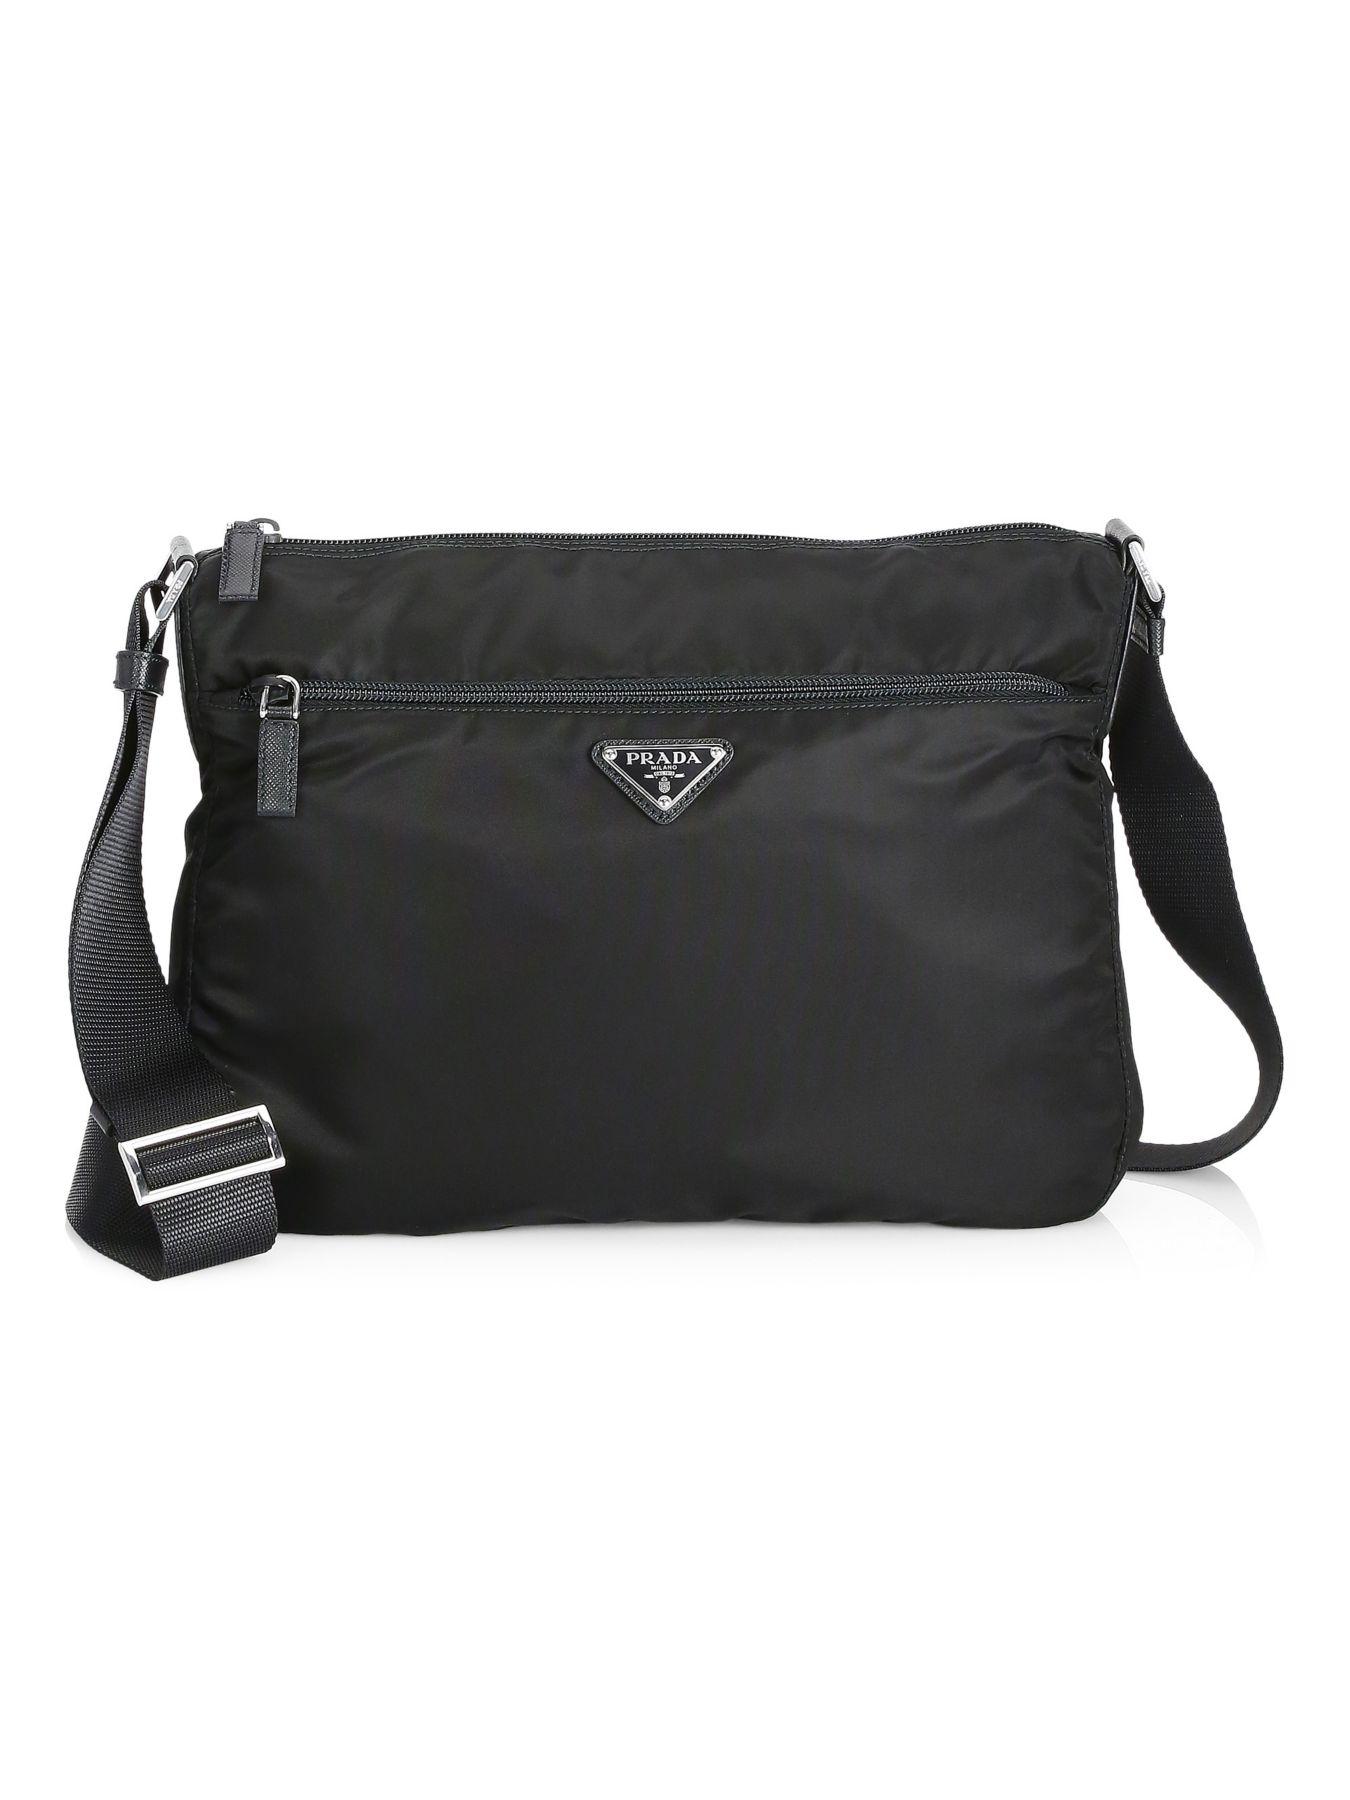 Prada Synthetic Large Nylon Crossbody Bag in Black | Lyst